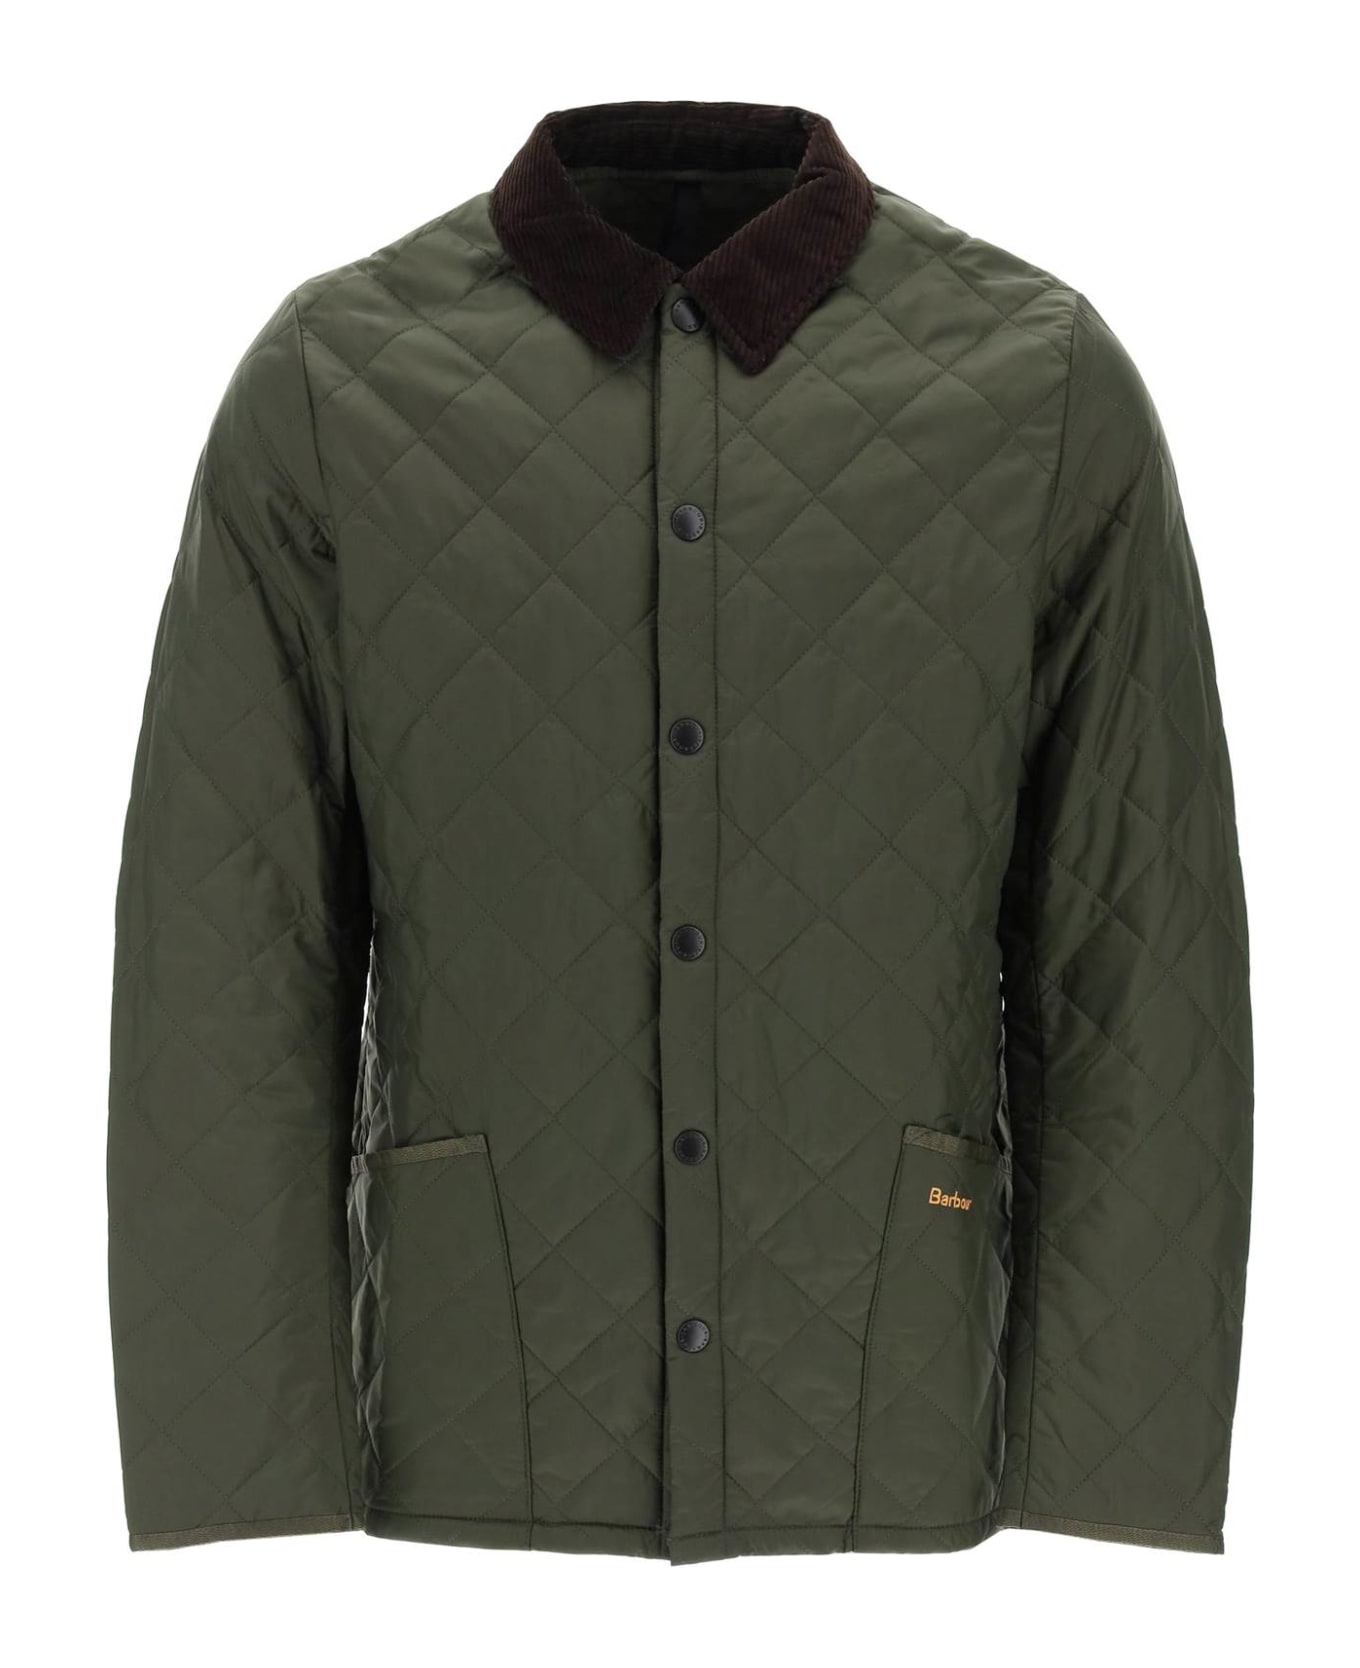 Barbour Heritage Liddesdale Quilted Jacket - OLIVE (Green)